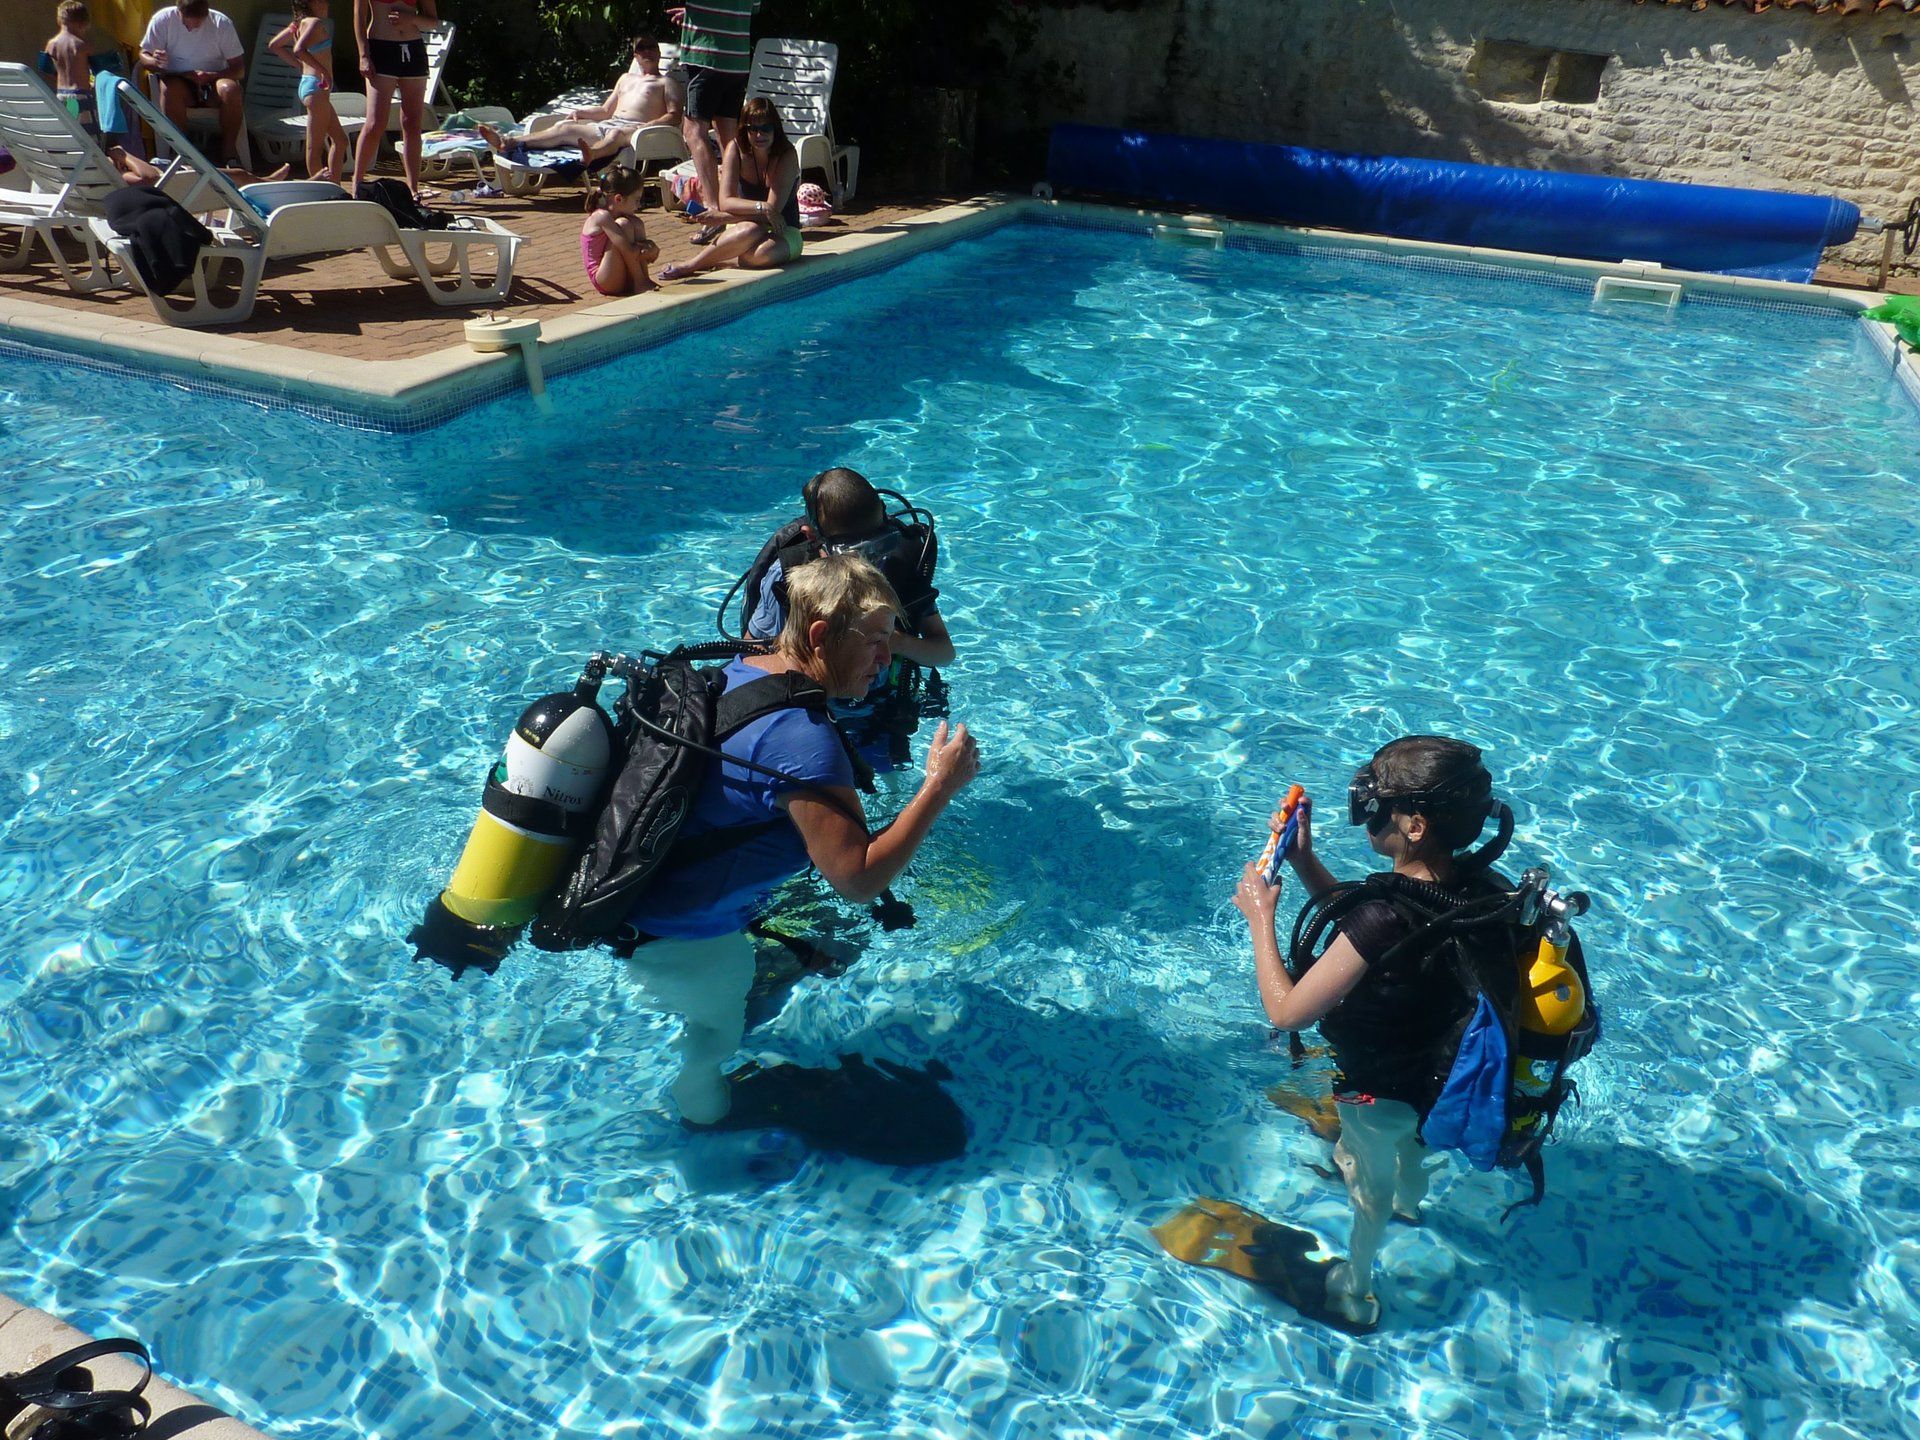 a scuba diving instructor teaching children to scuba dive in a swimming pool